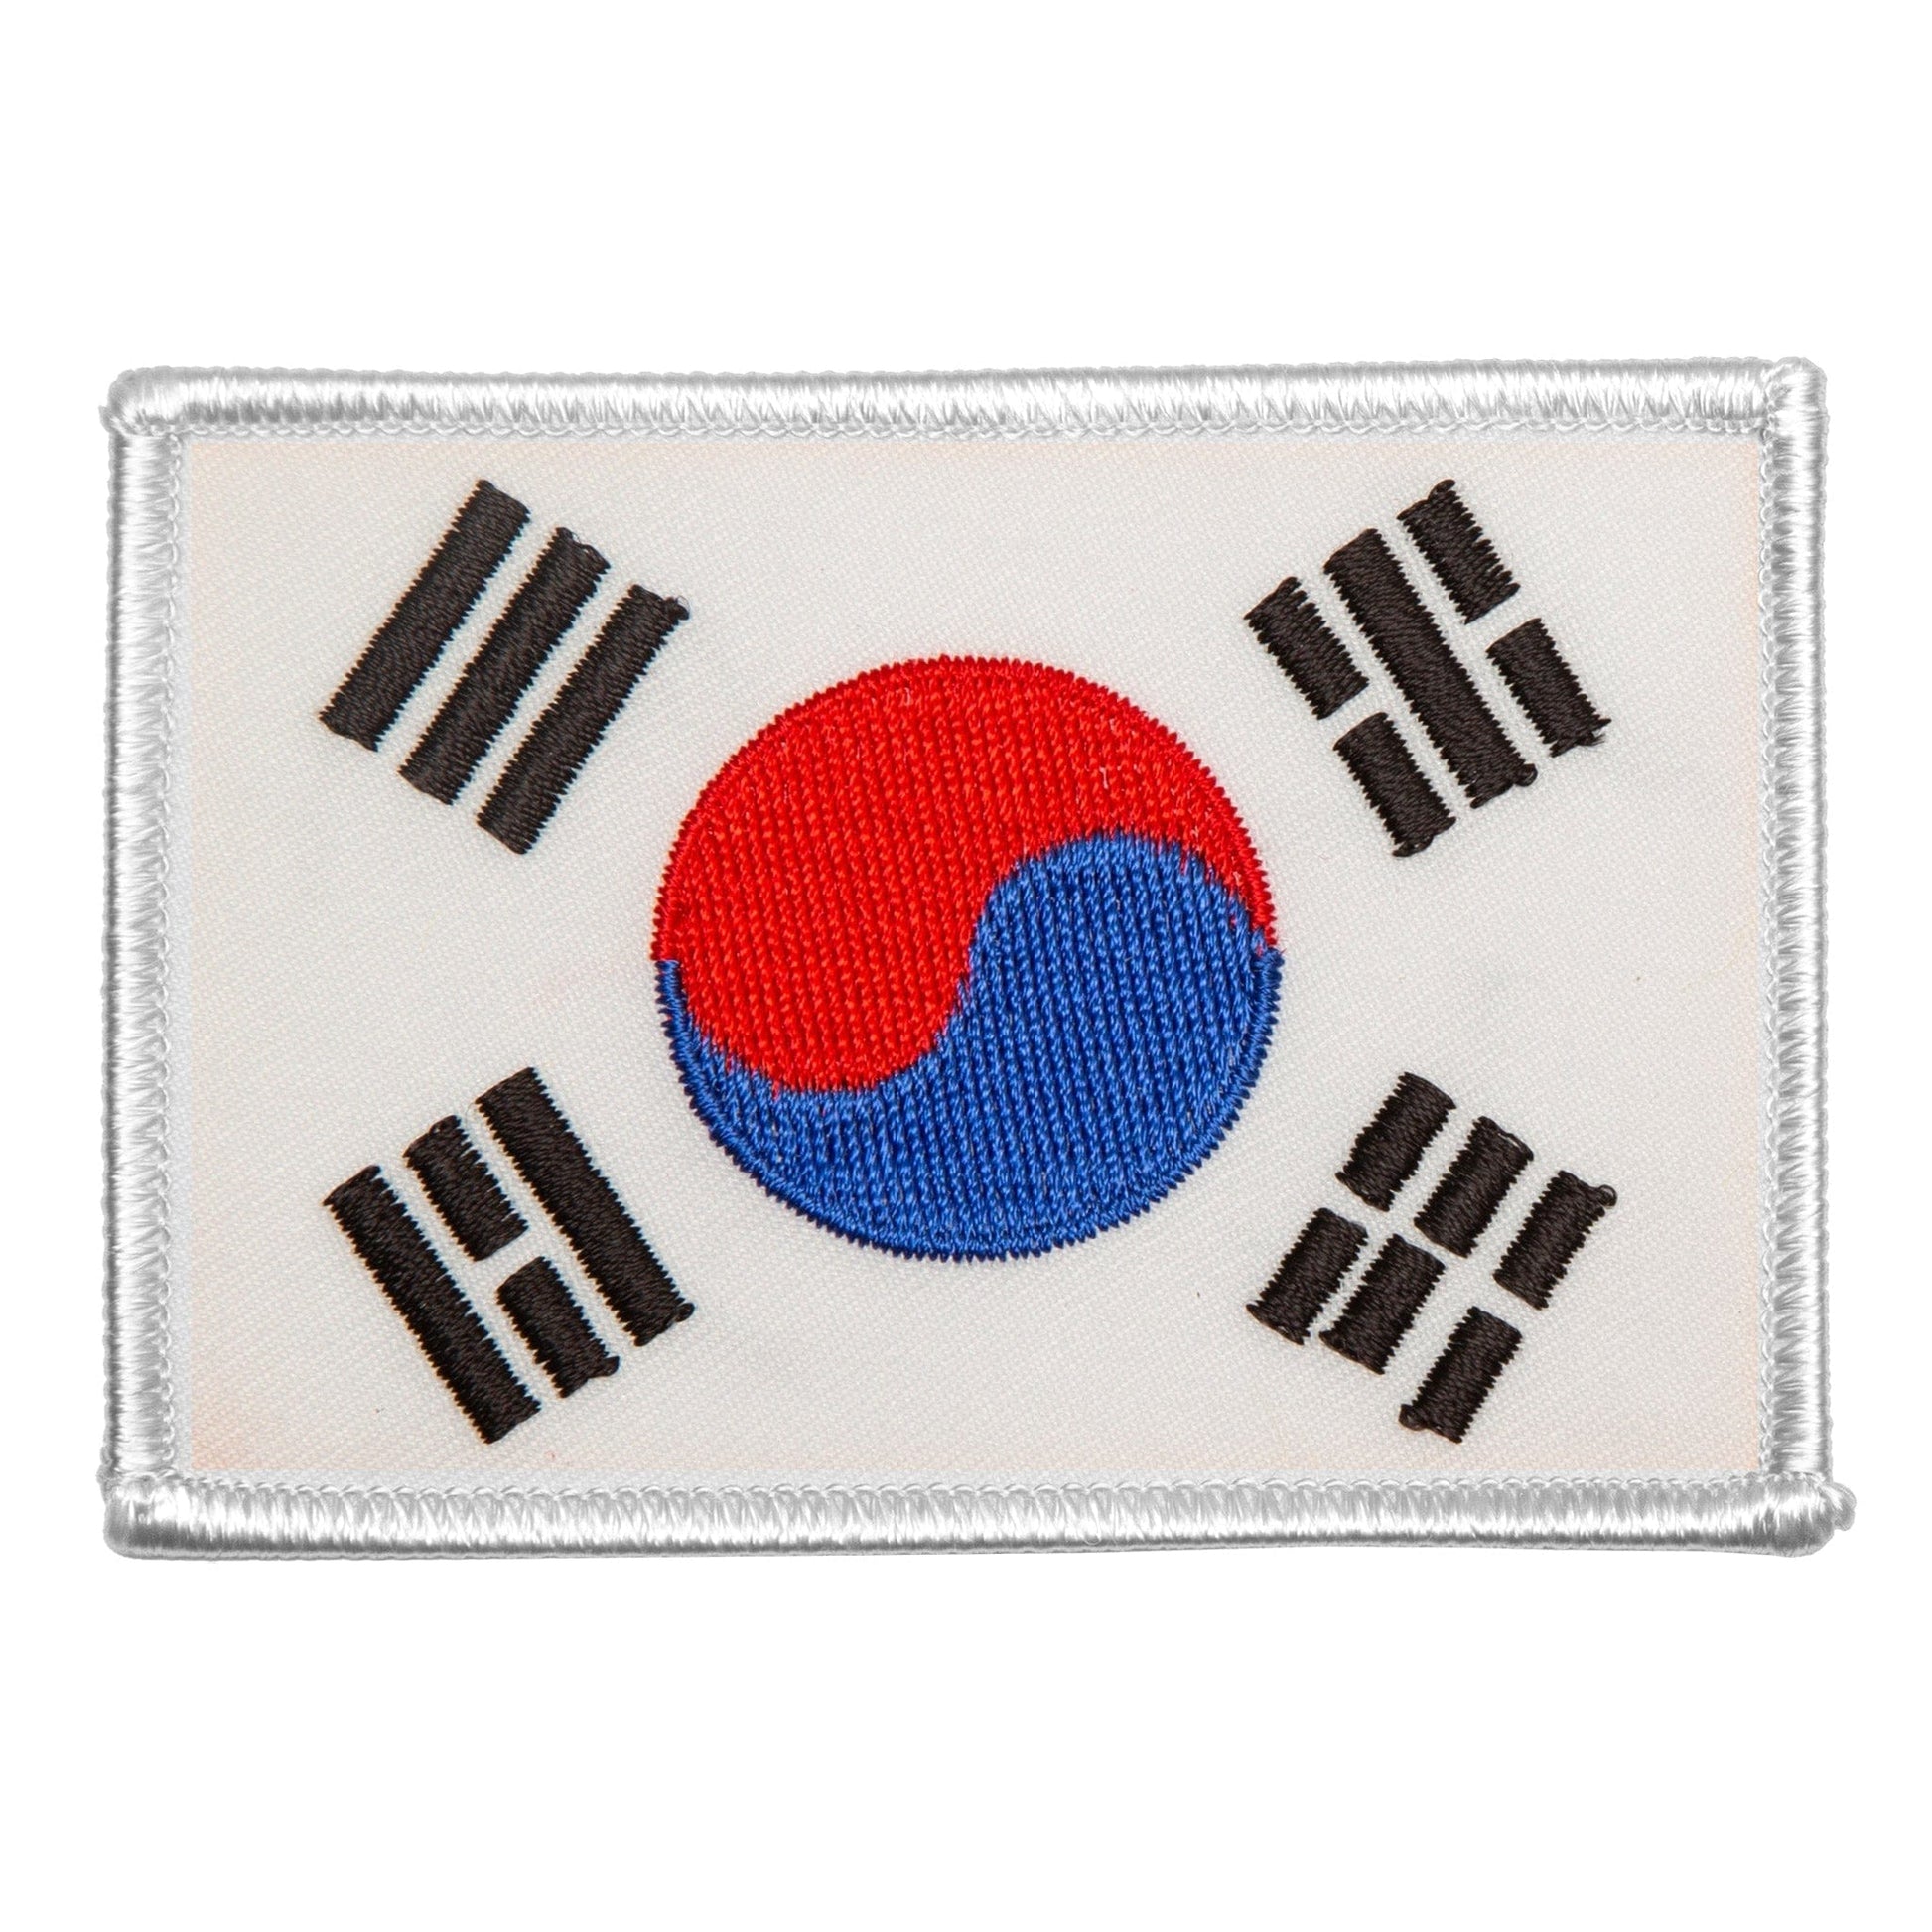 EclipseMartialArtsSupplies sporting goods Korea Flag Patch White TrimTaekwondo martial arts